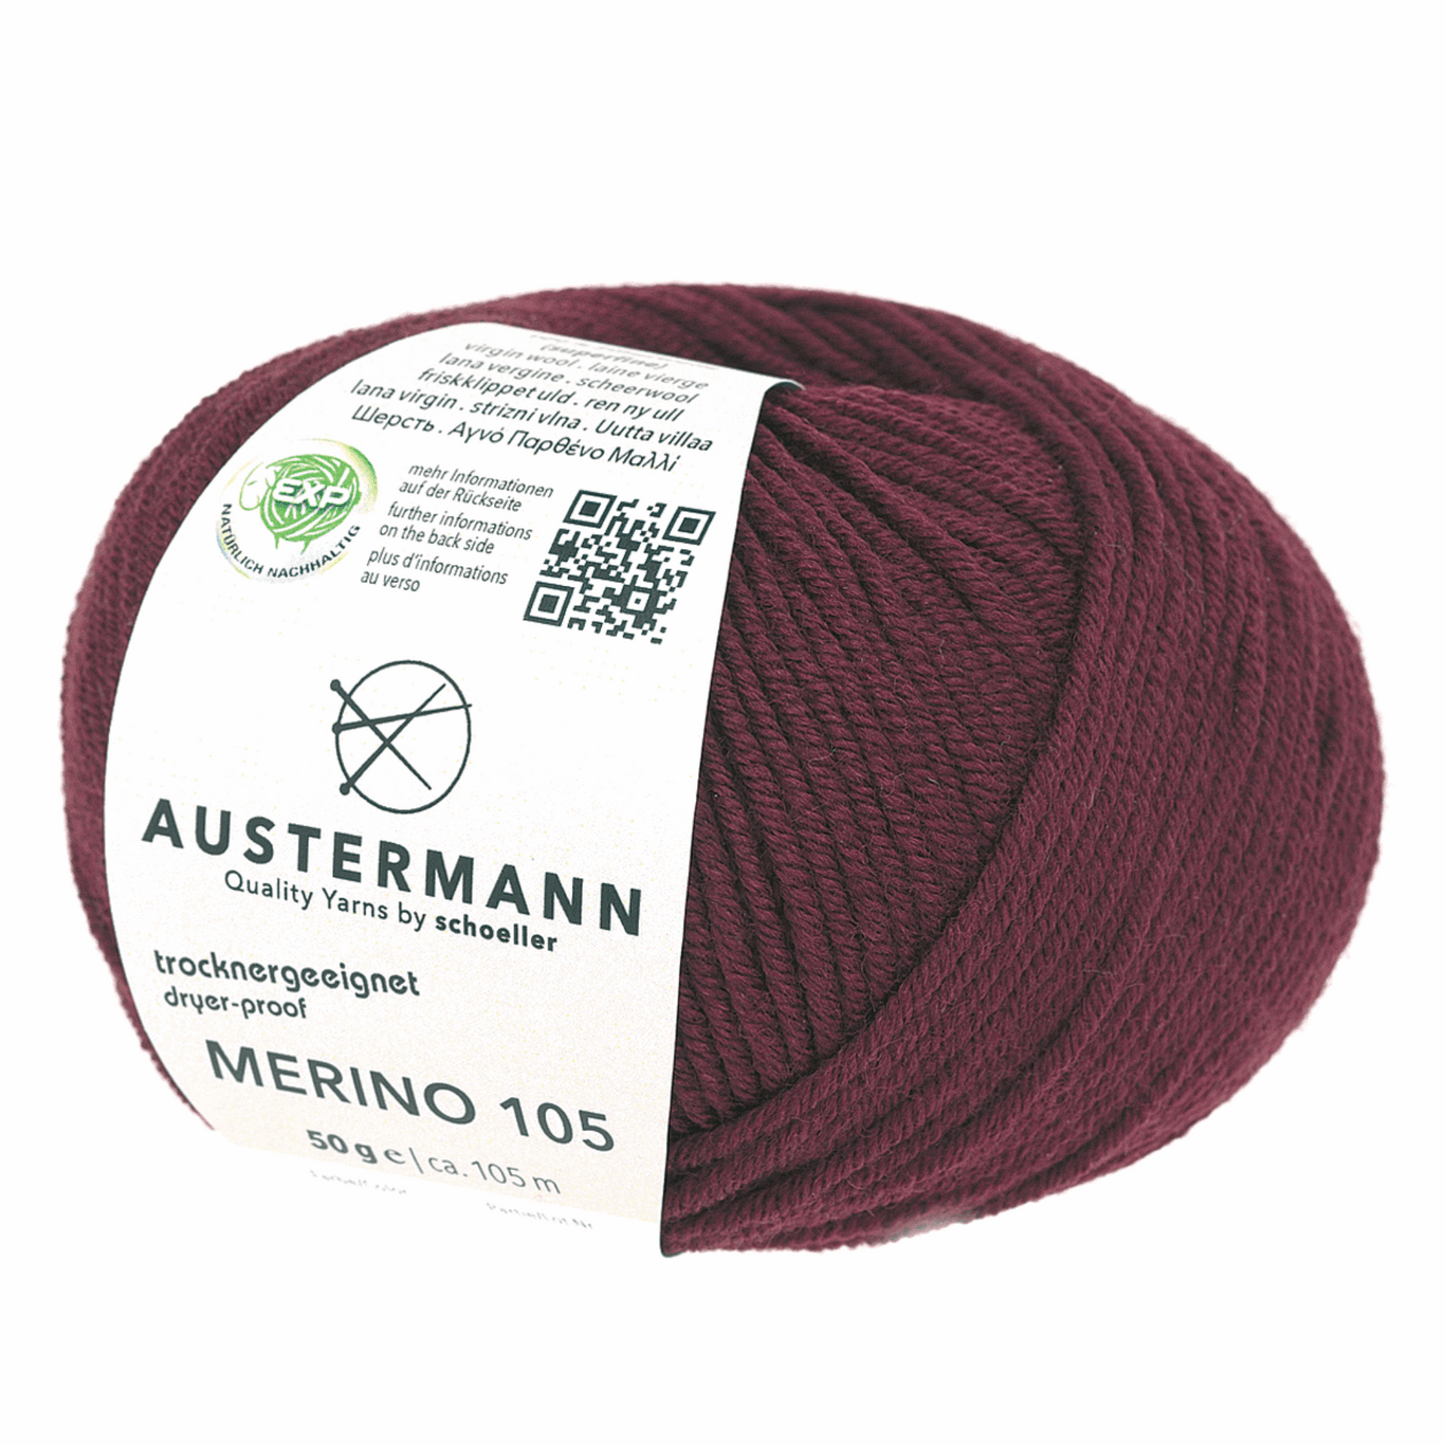 Austermann Merino 105 EXP 50g, 97612, Farbe bordeaux 325